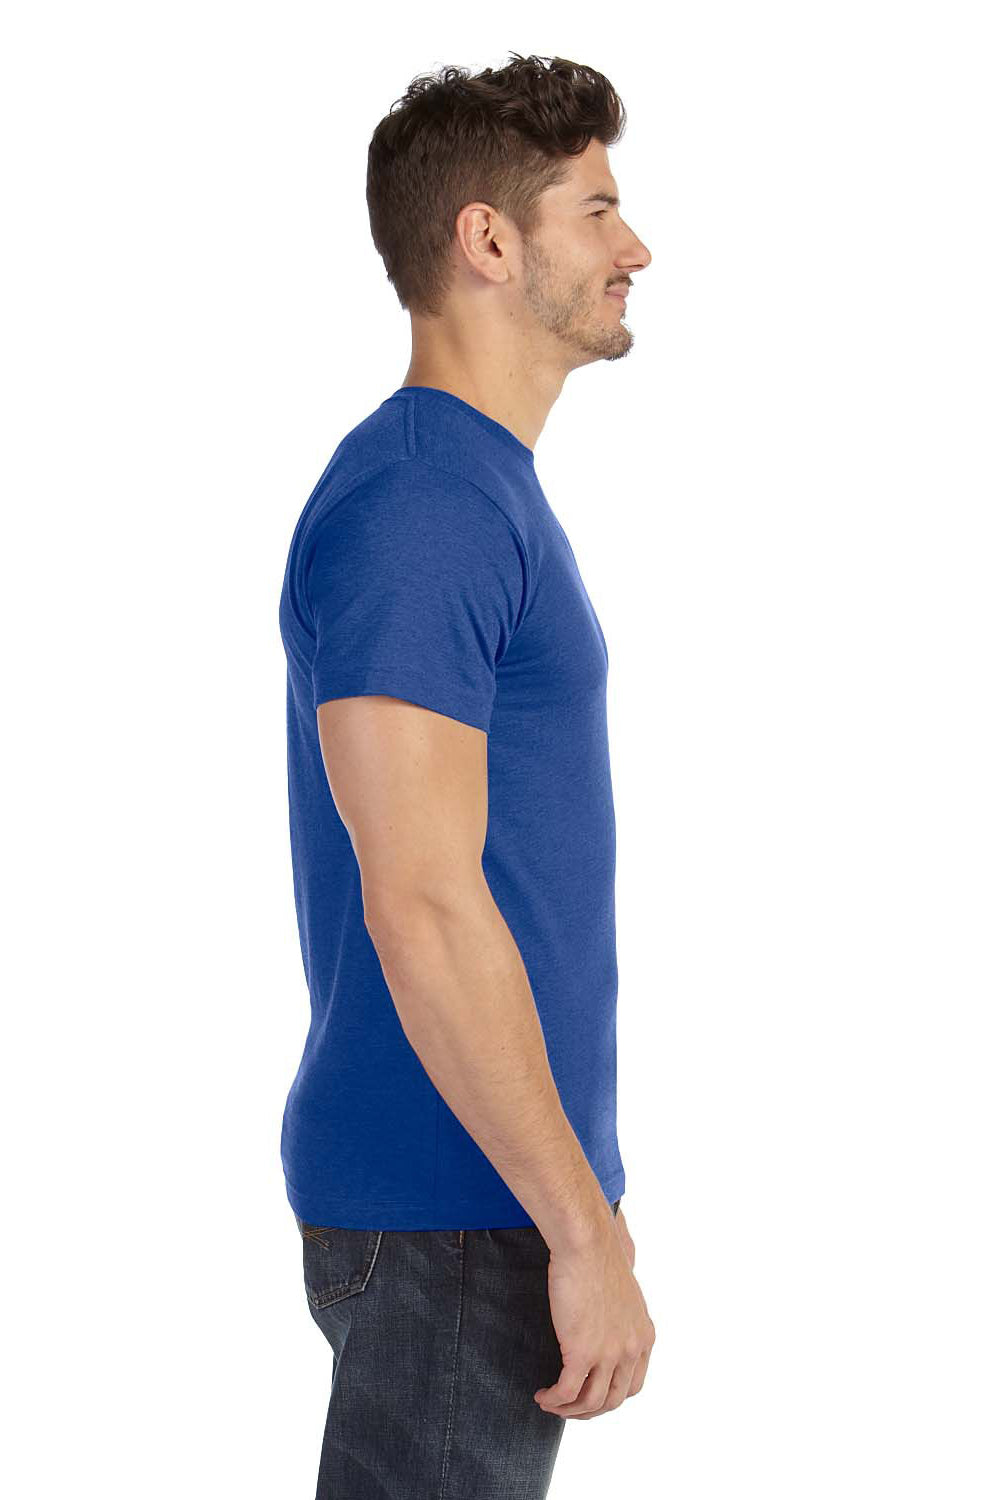 LAT 6905 Mens Fine Jersey Short Sleeve Crewneck T-Shirt Royal Blue Side